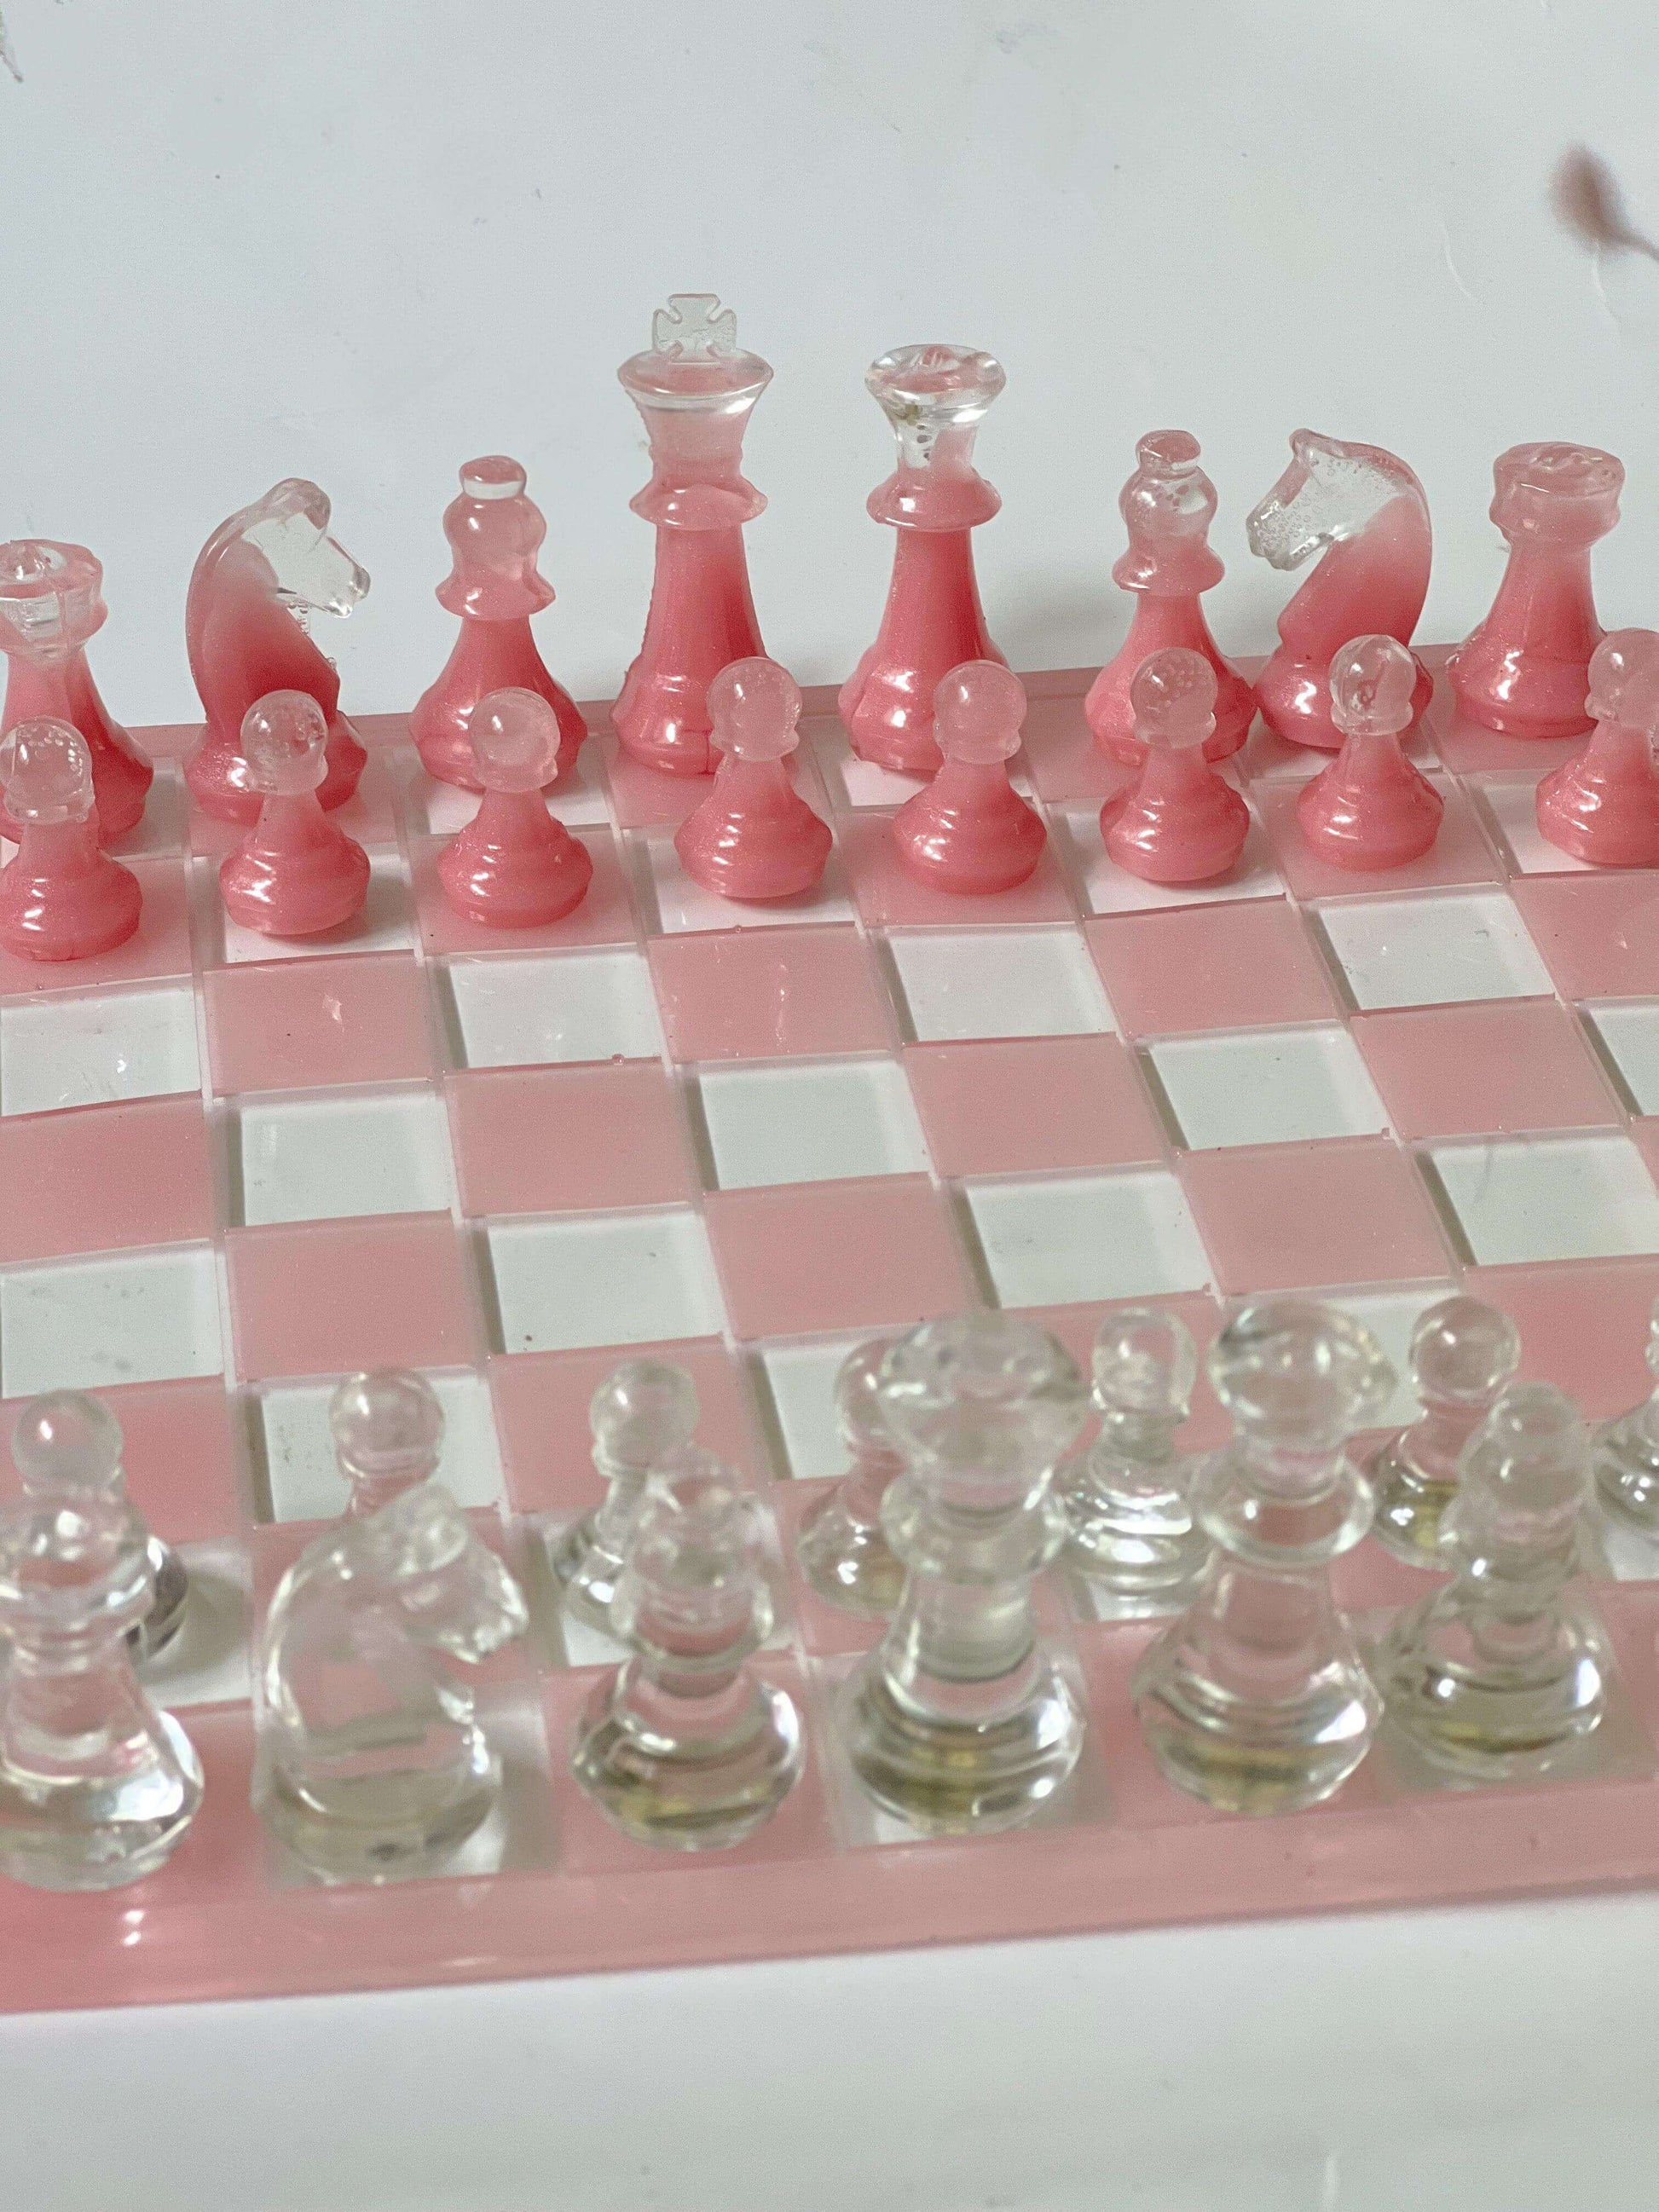 Chess Board | Innocent | Resin Handmade | Big Size - Nature's Art Lab